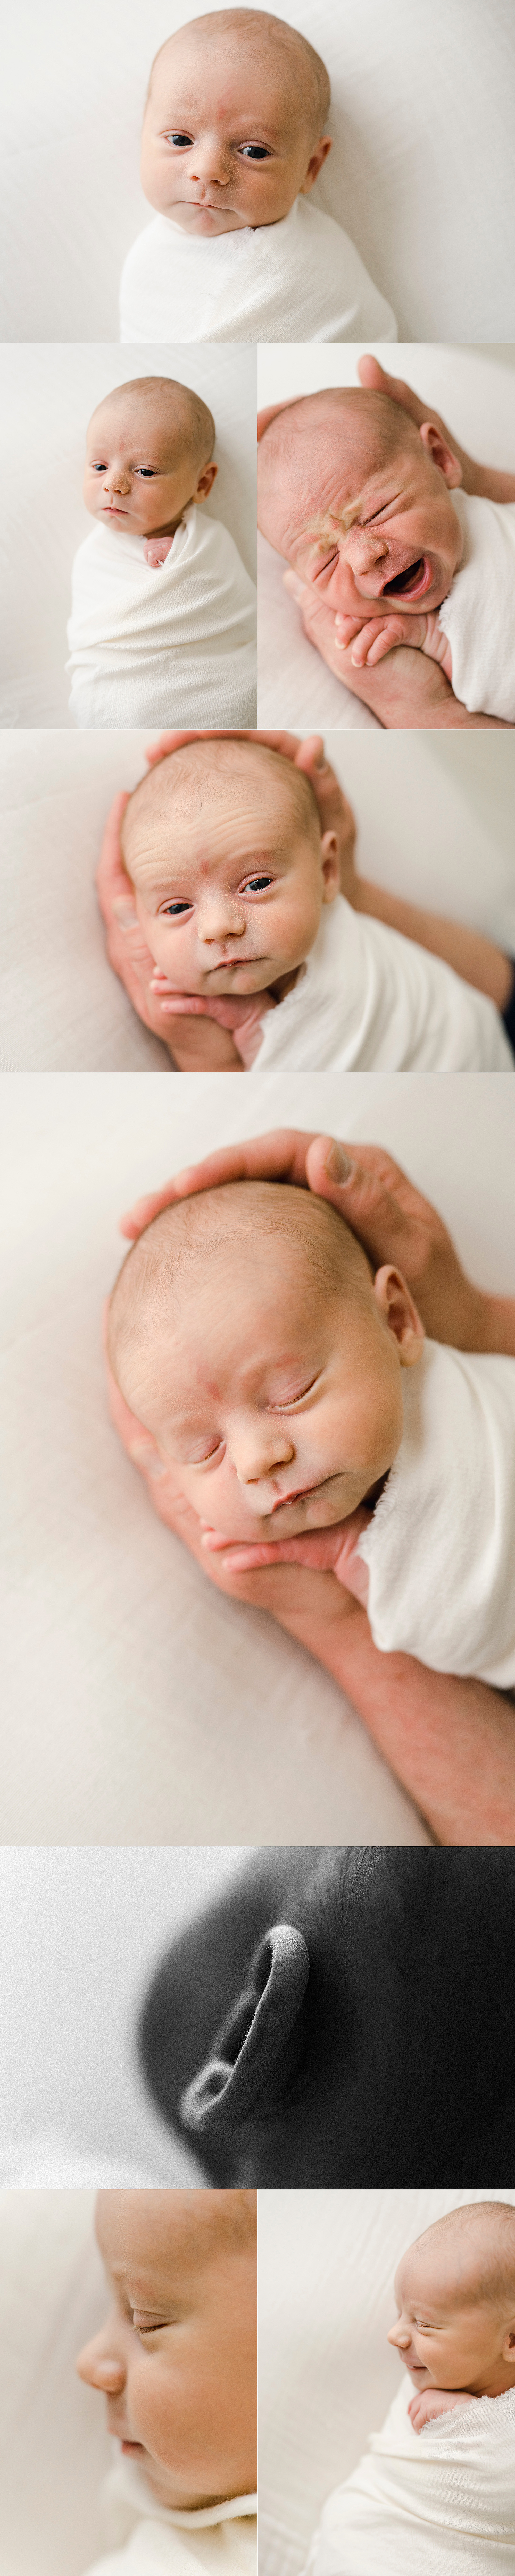 newborn awake and sleeping in dads hands